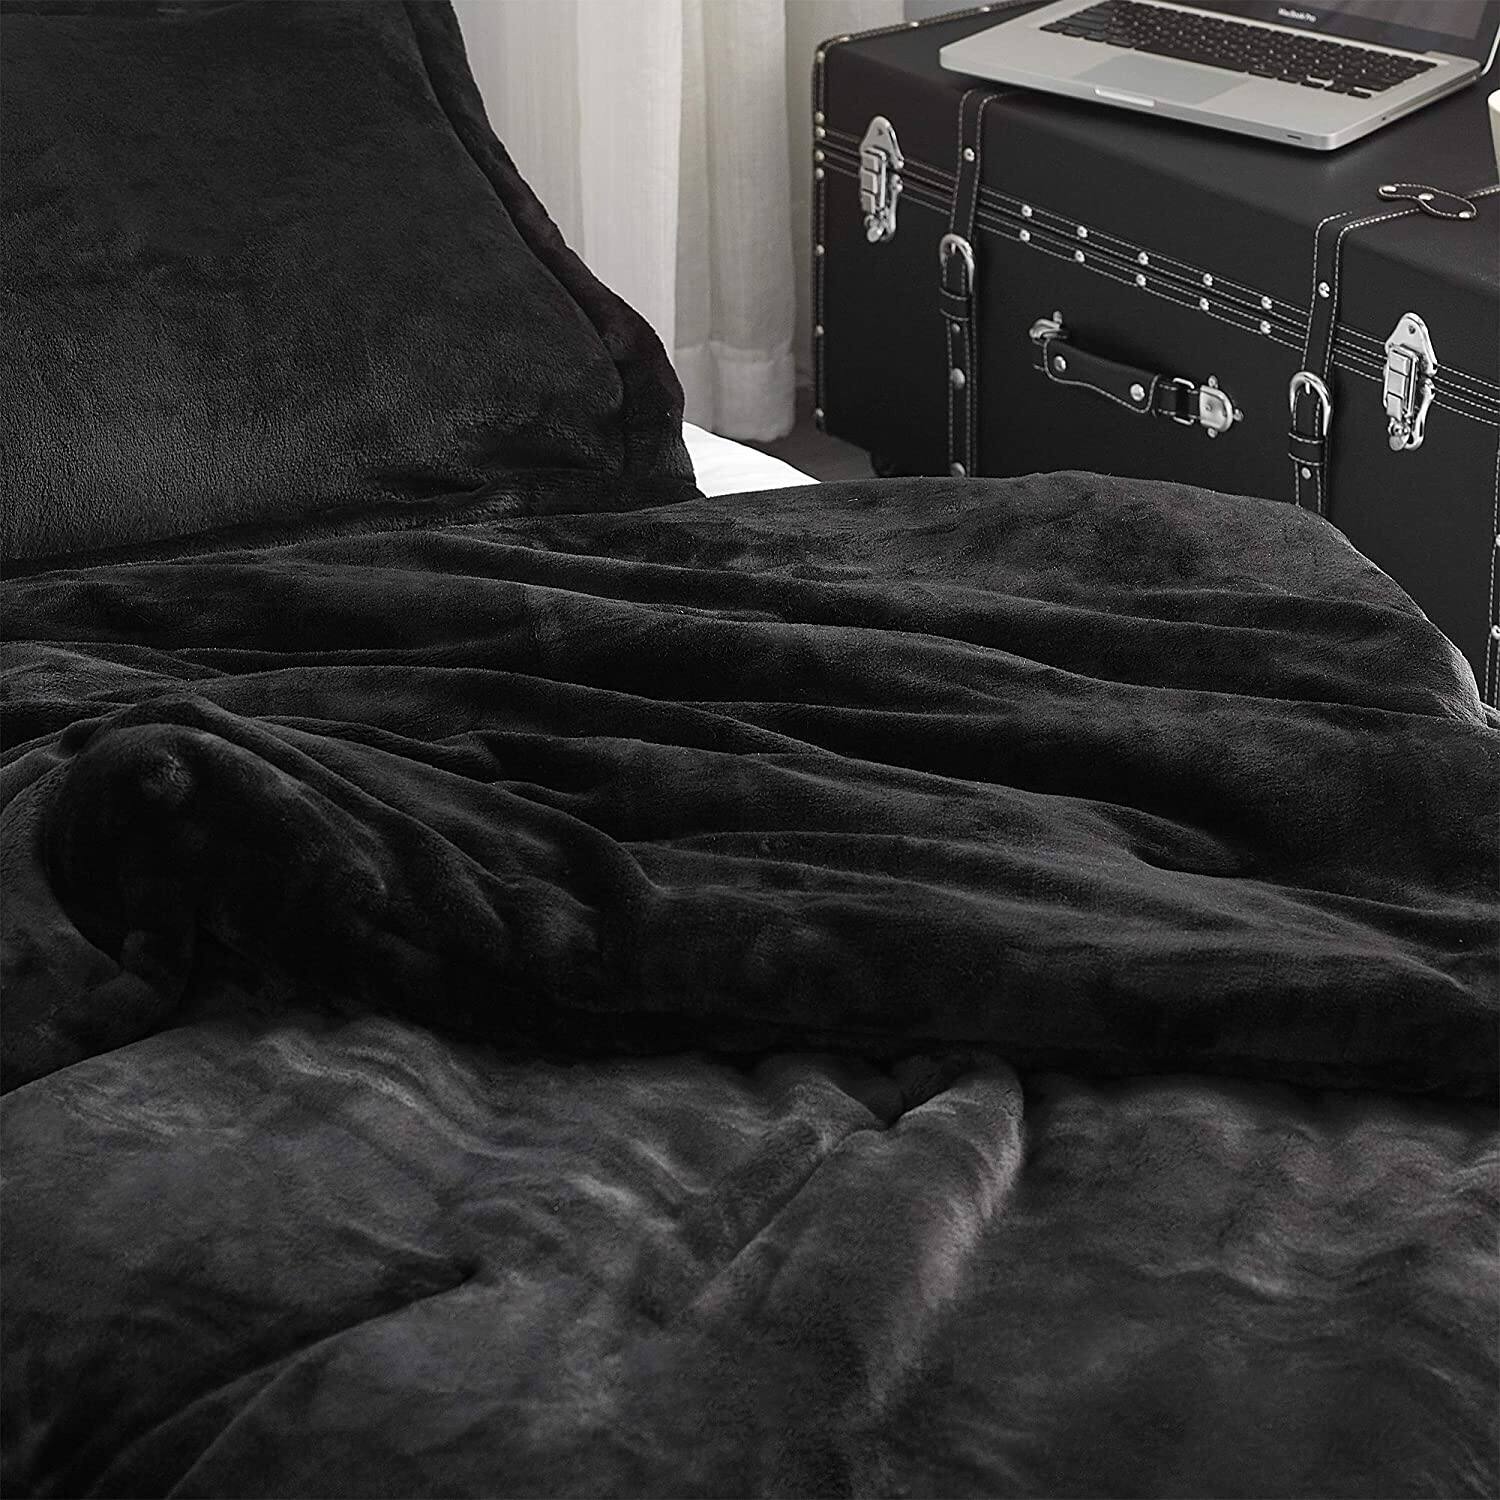 Coma Inducer Oversized Black Comforter Set